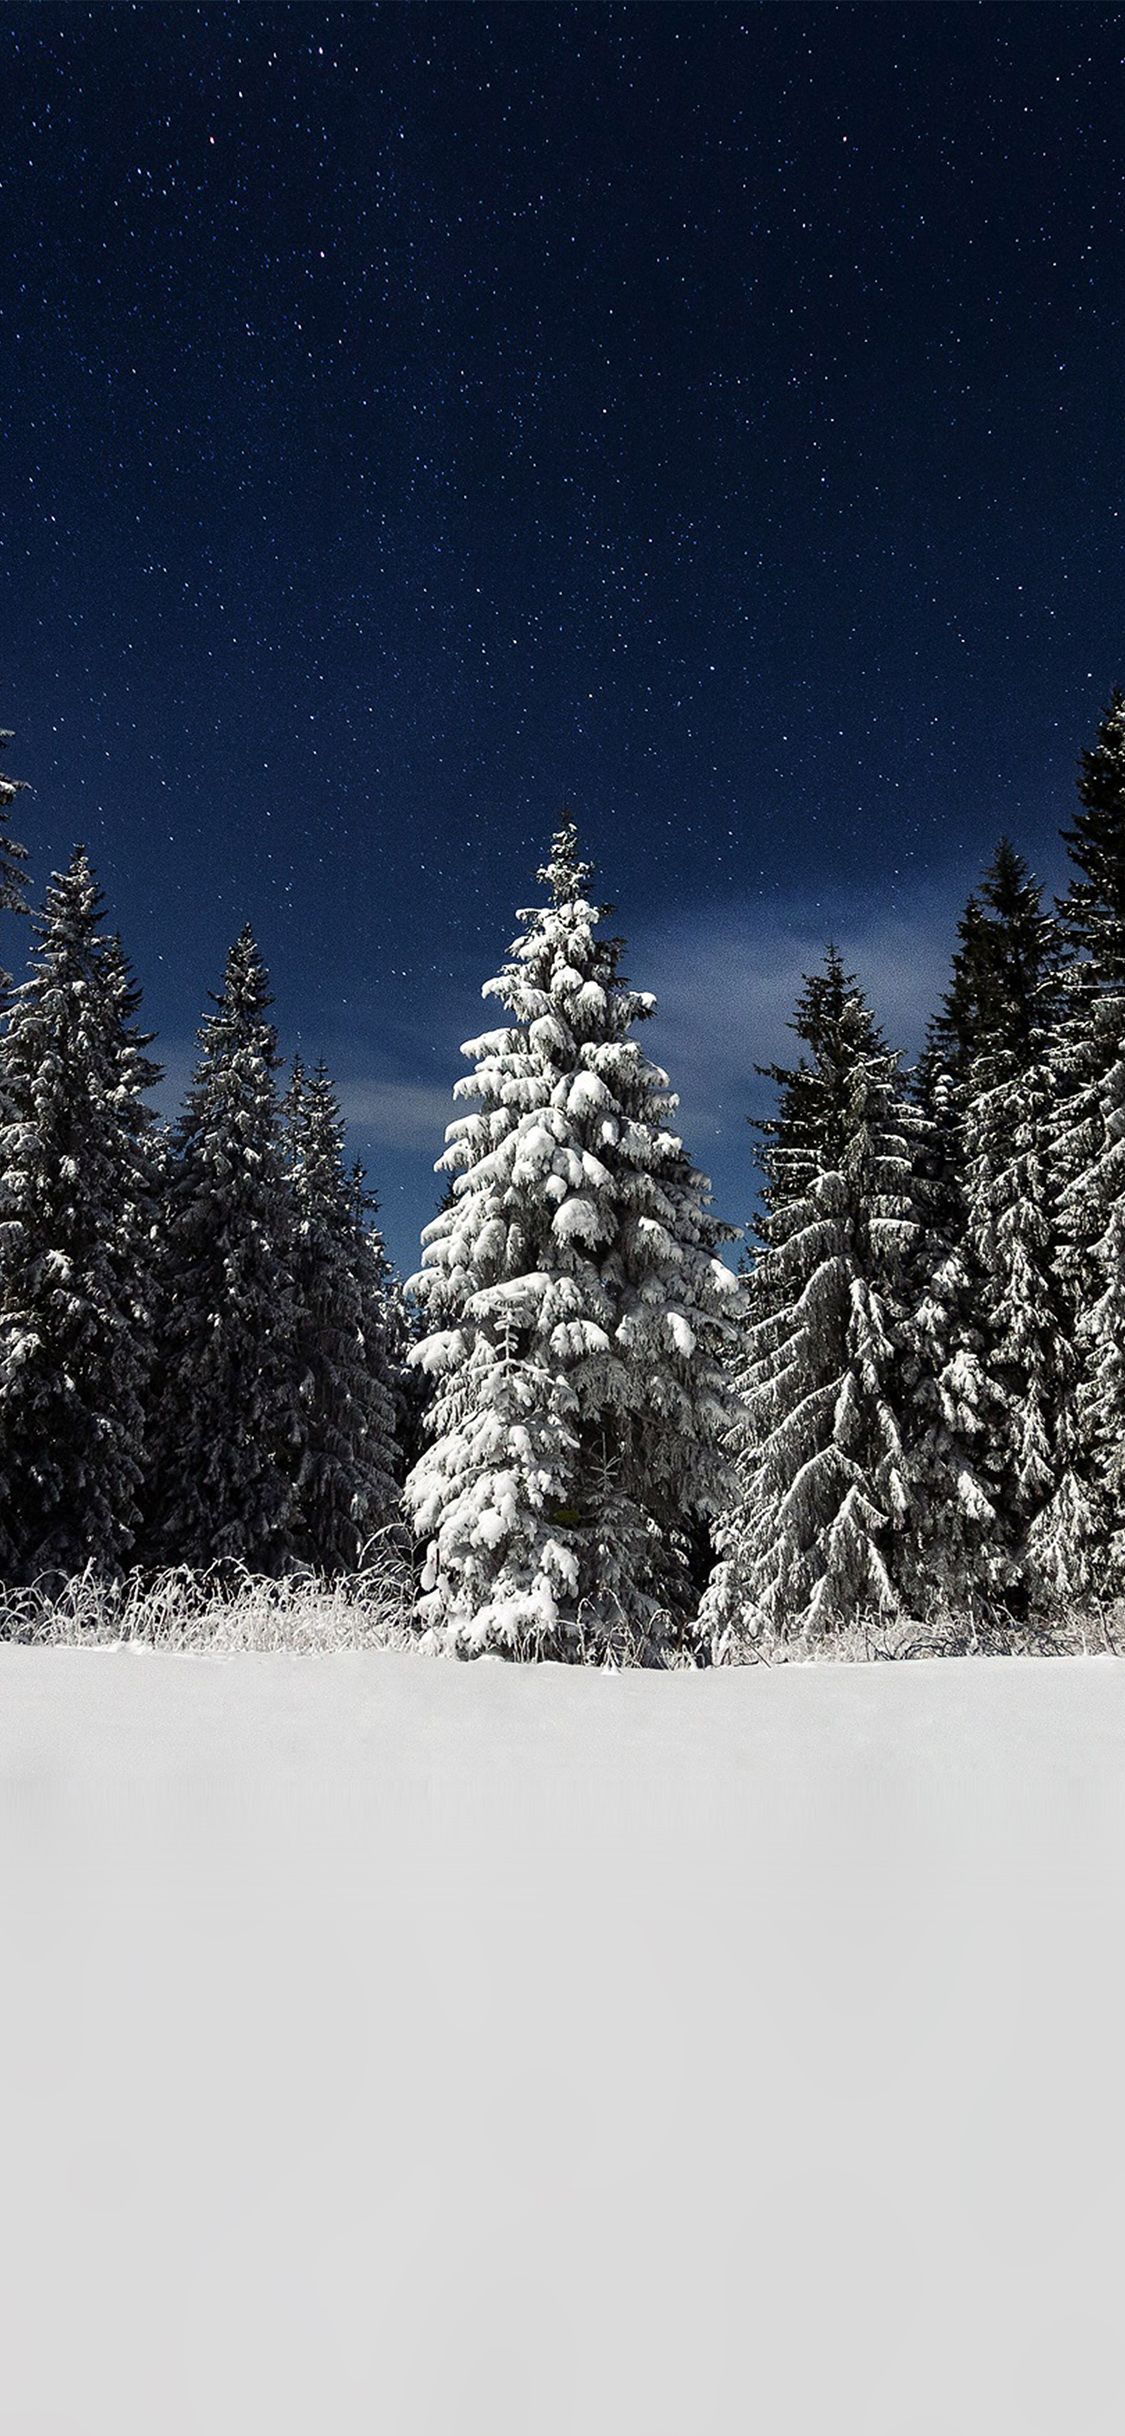 iPhone X wallpaper. snow winter wood mountain sky star night